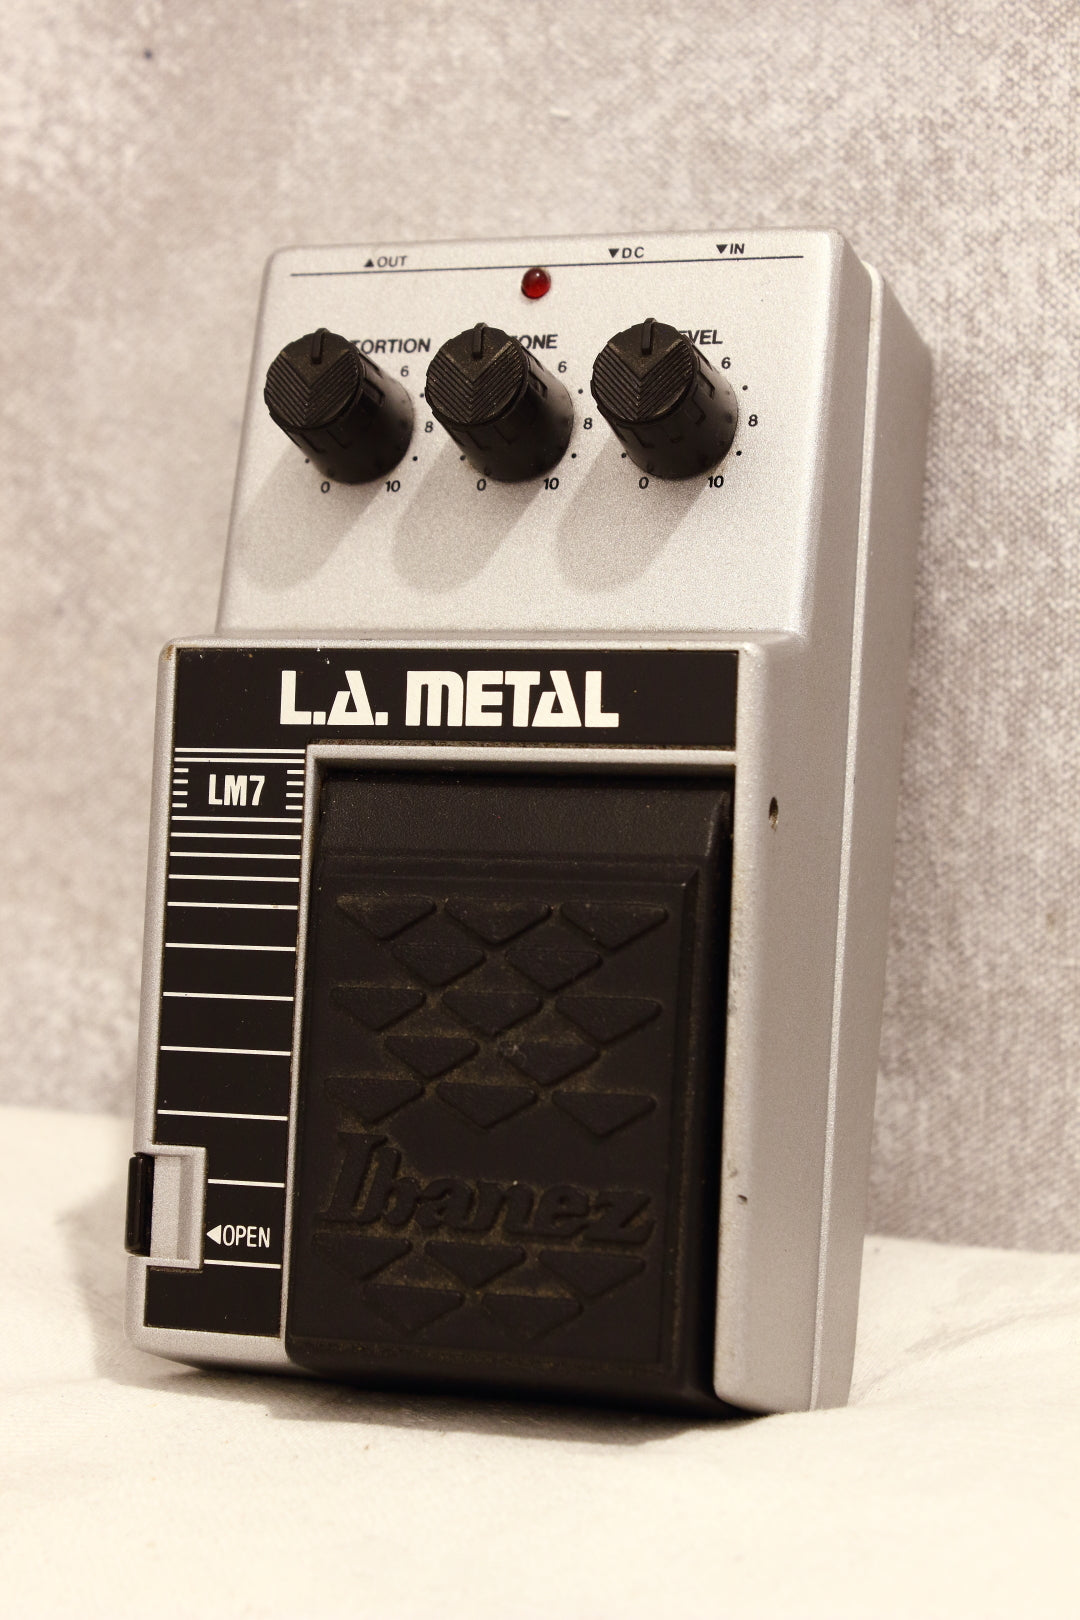 Ibanez LM7 L.A. Metal Distortion Pedal